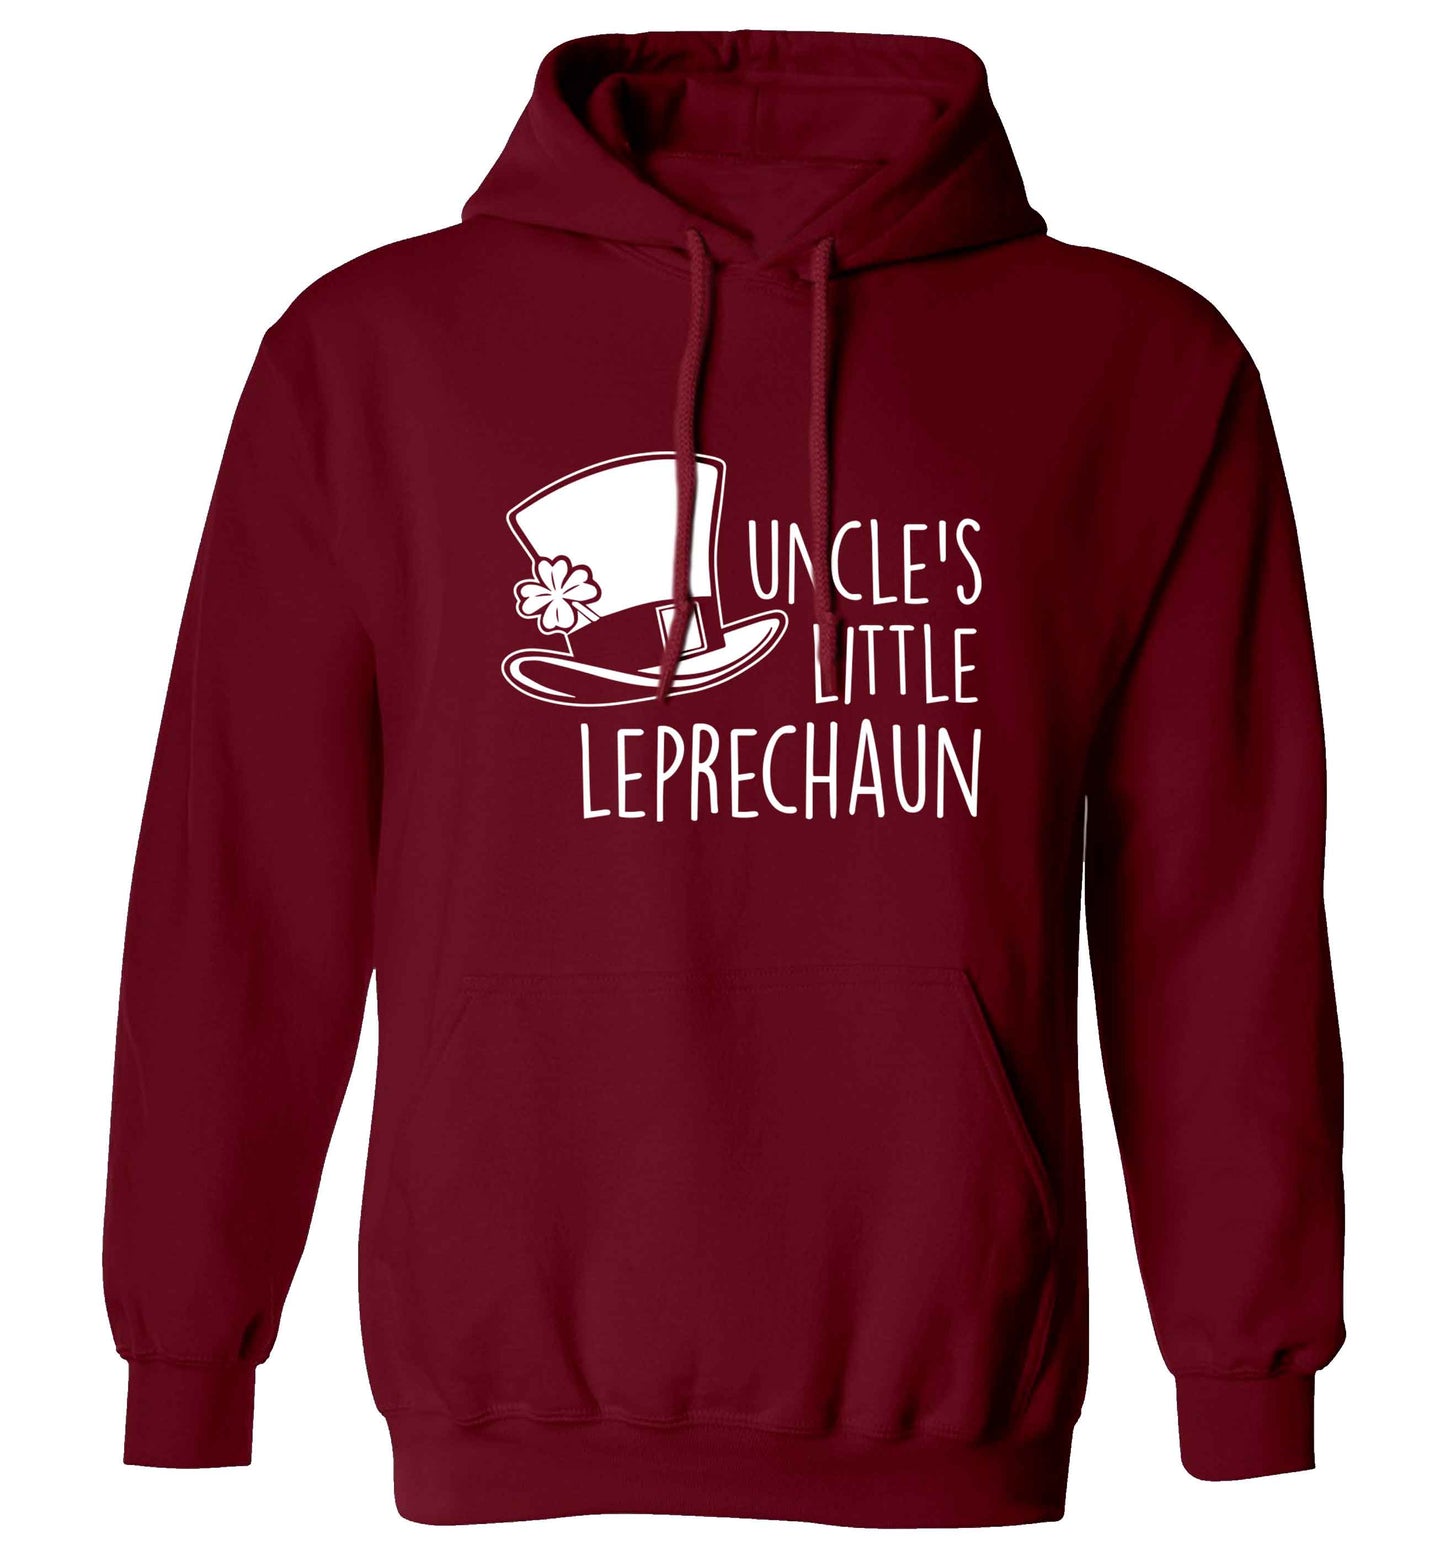 Uncles little leprechaun adults unisex maroon hoodie 2XL